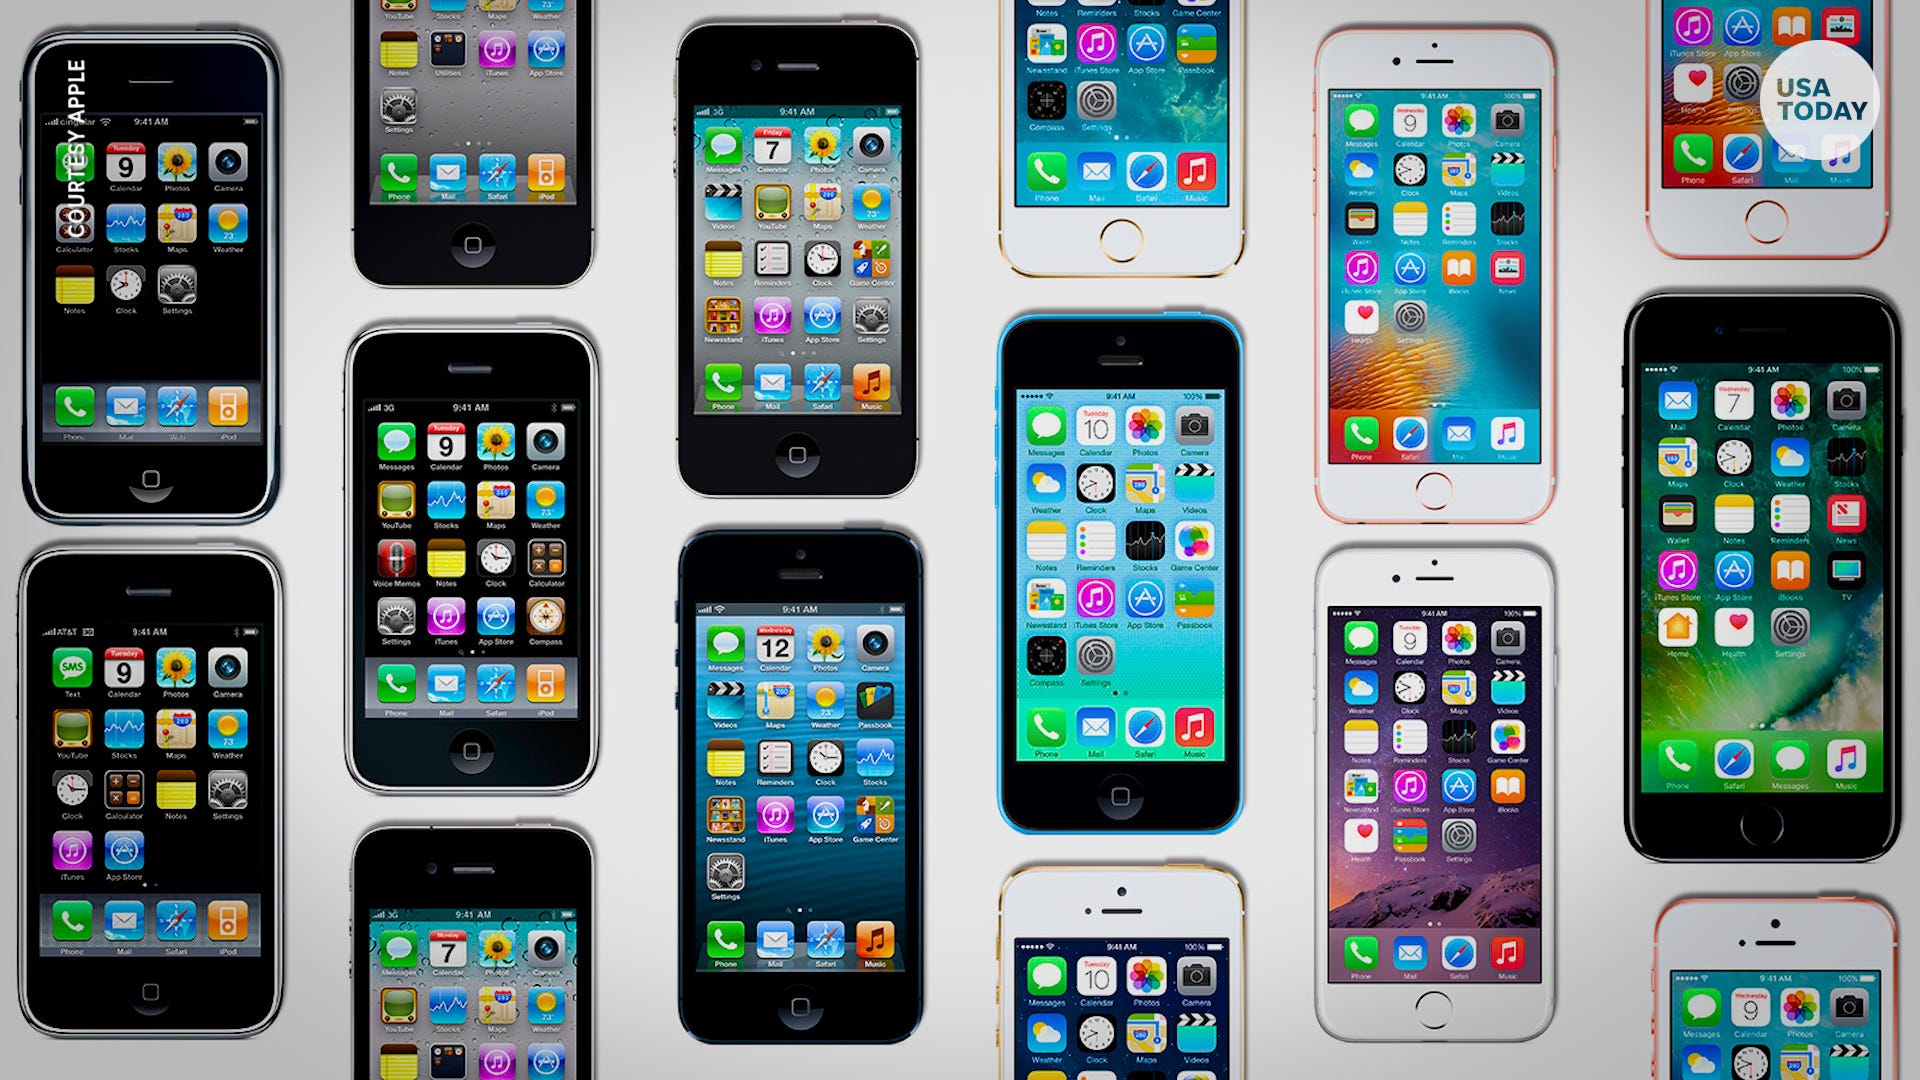 Apple-Google feud intensifies over 'false' iPhone security flaws